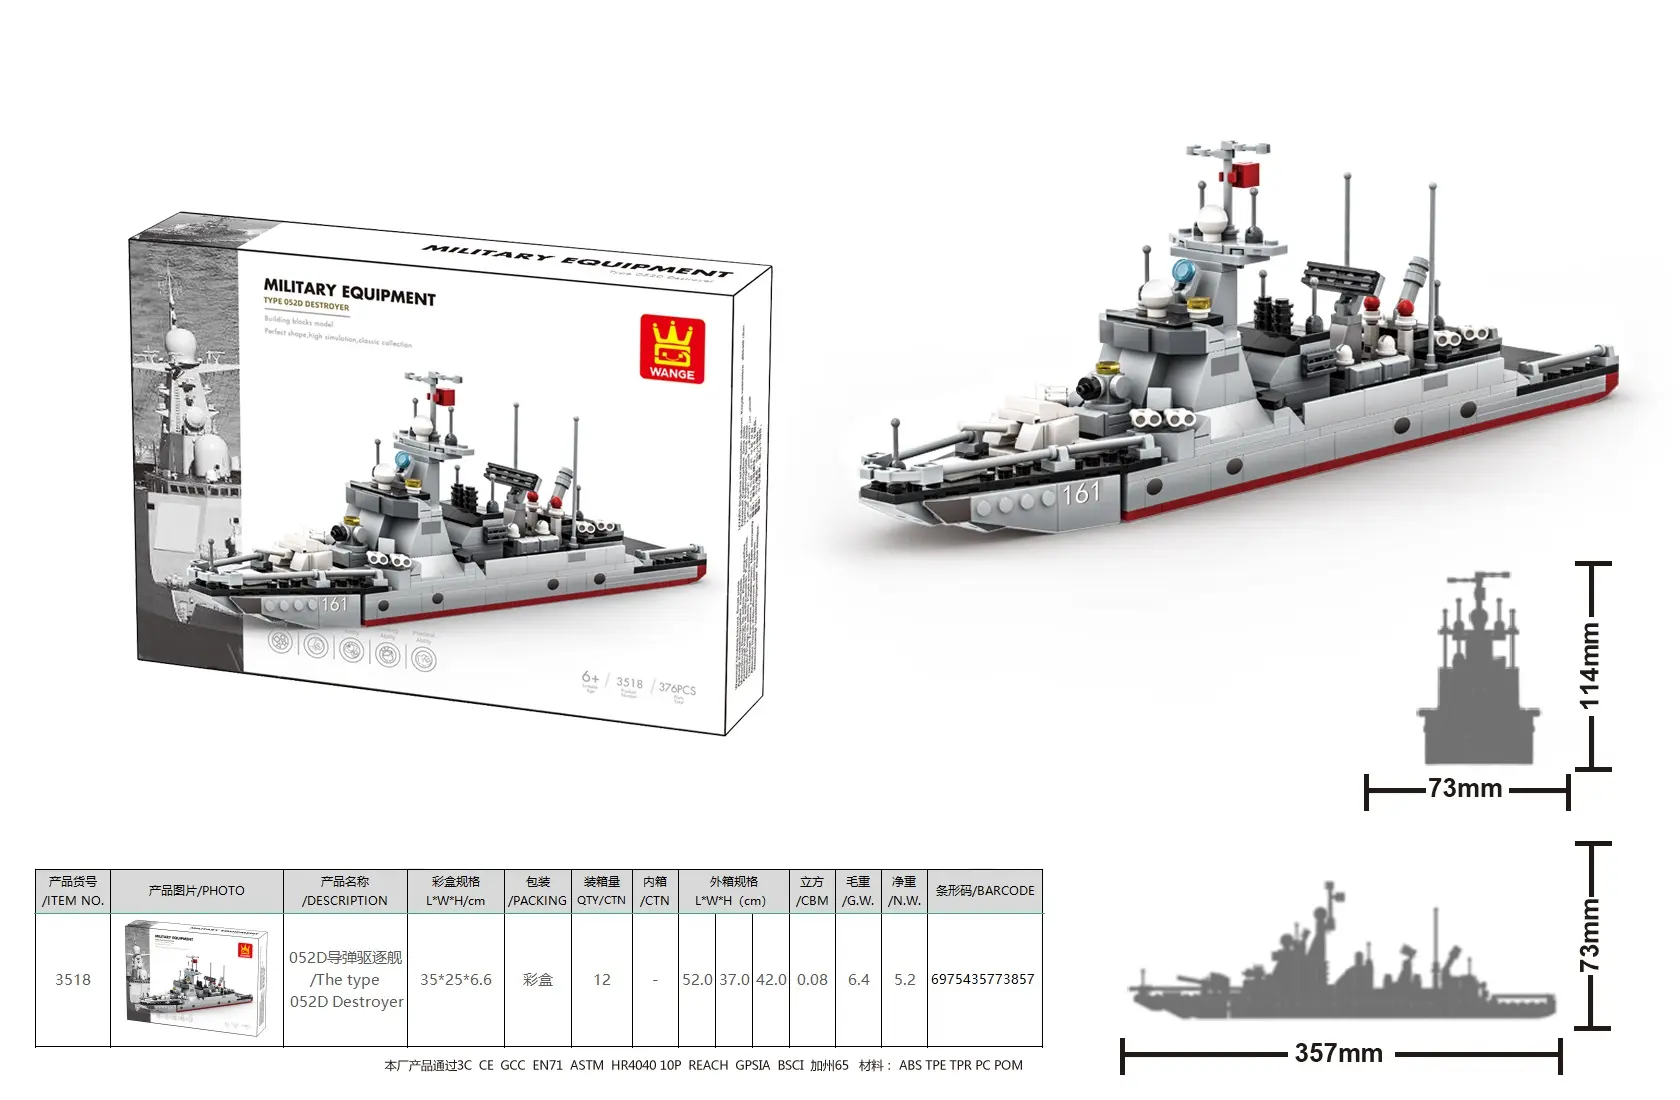 New Arrival Wange Military Equipment Series Battleship DIY Toy Set The Type 052D Destroyer Compatible Bricks Building Block Set